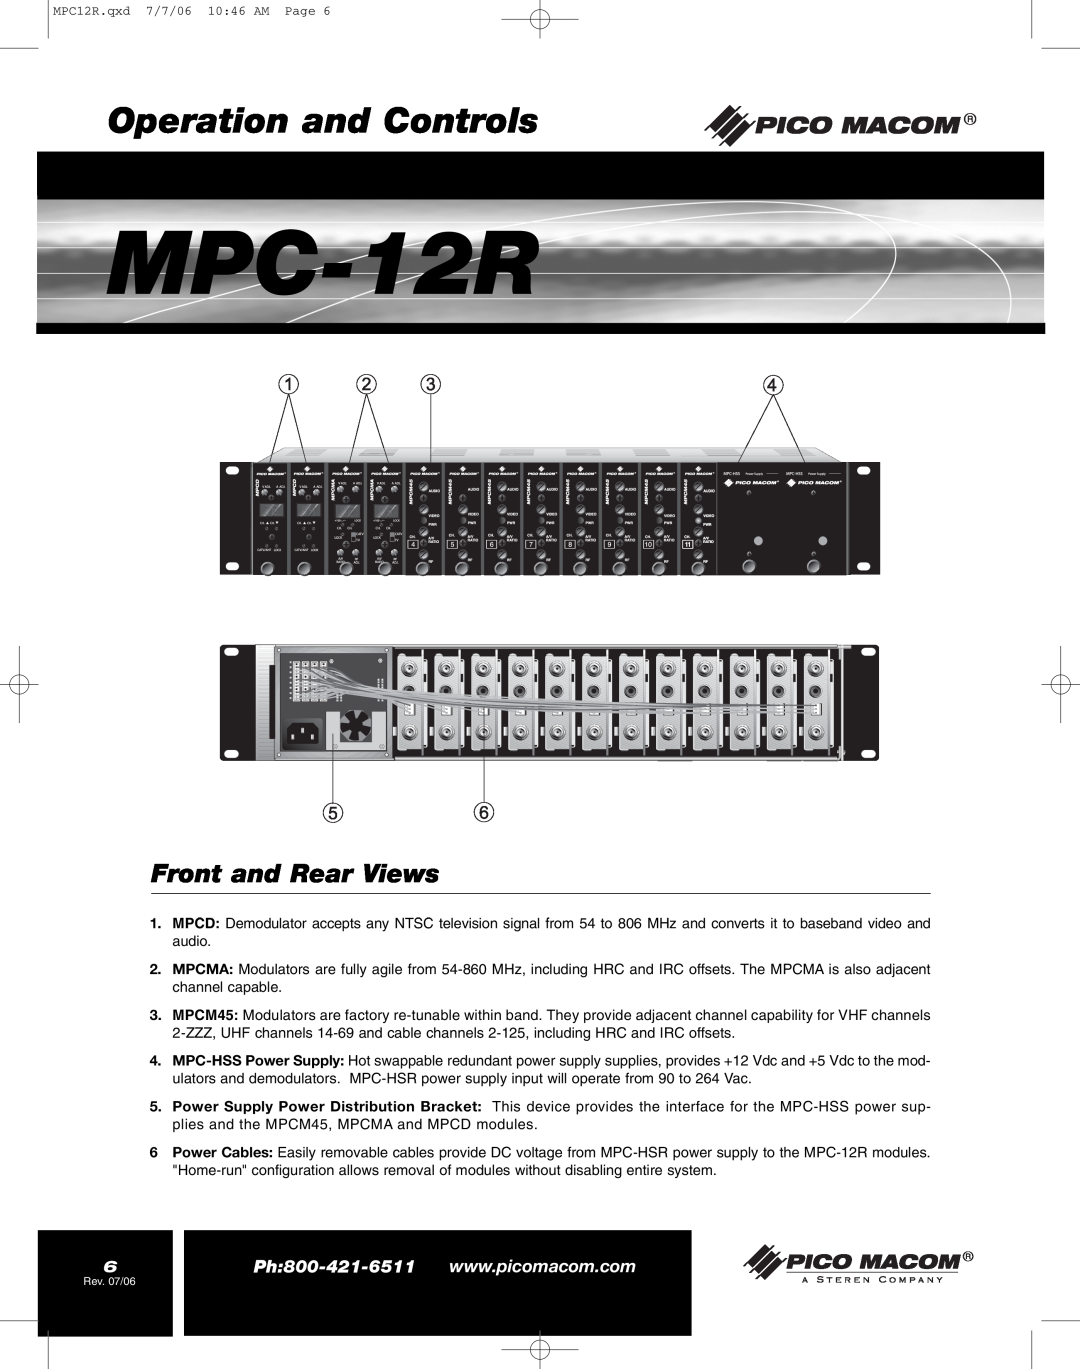 Pico Macom MPC-12R manual Operation and Controls, Front and Rear Views 